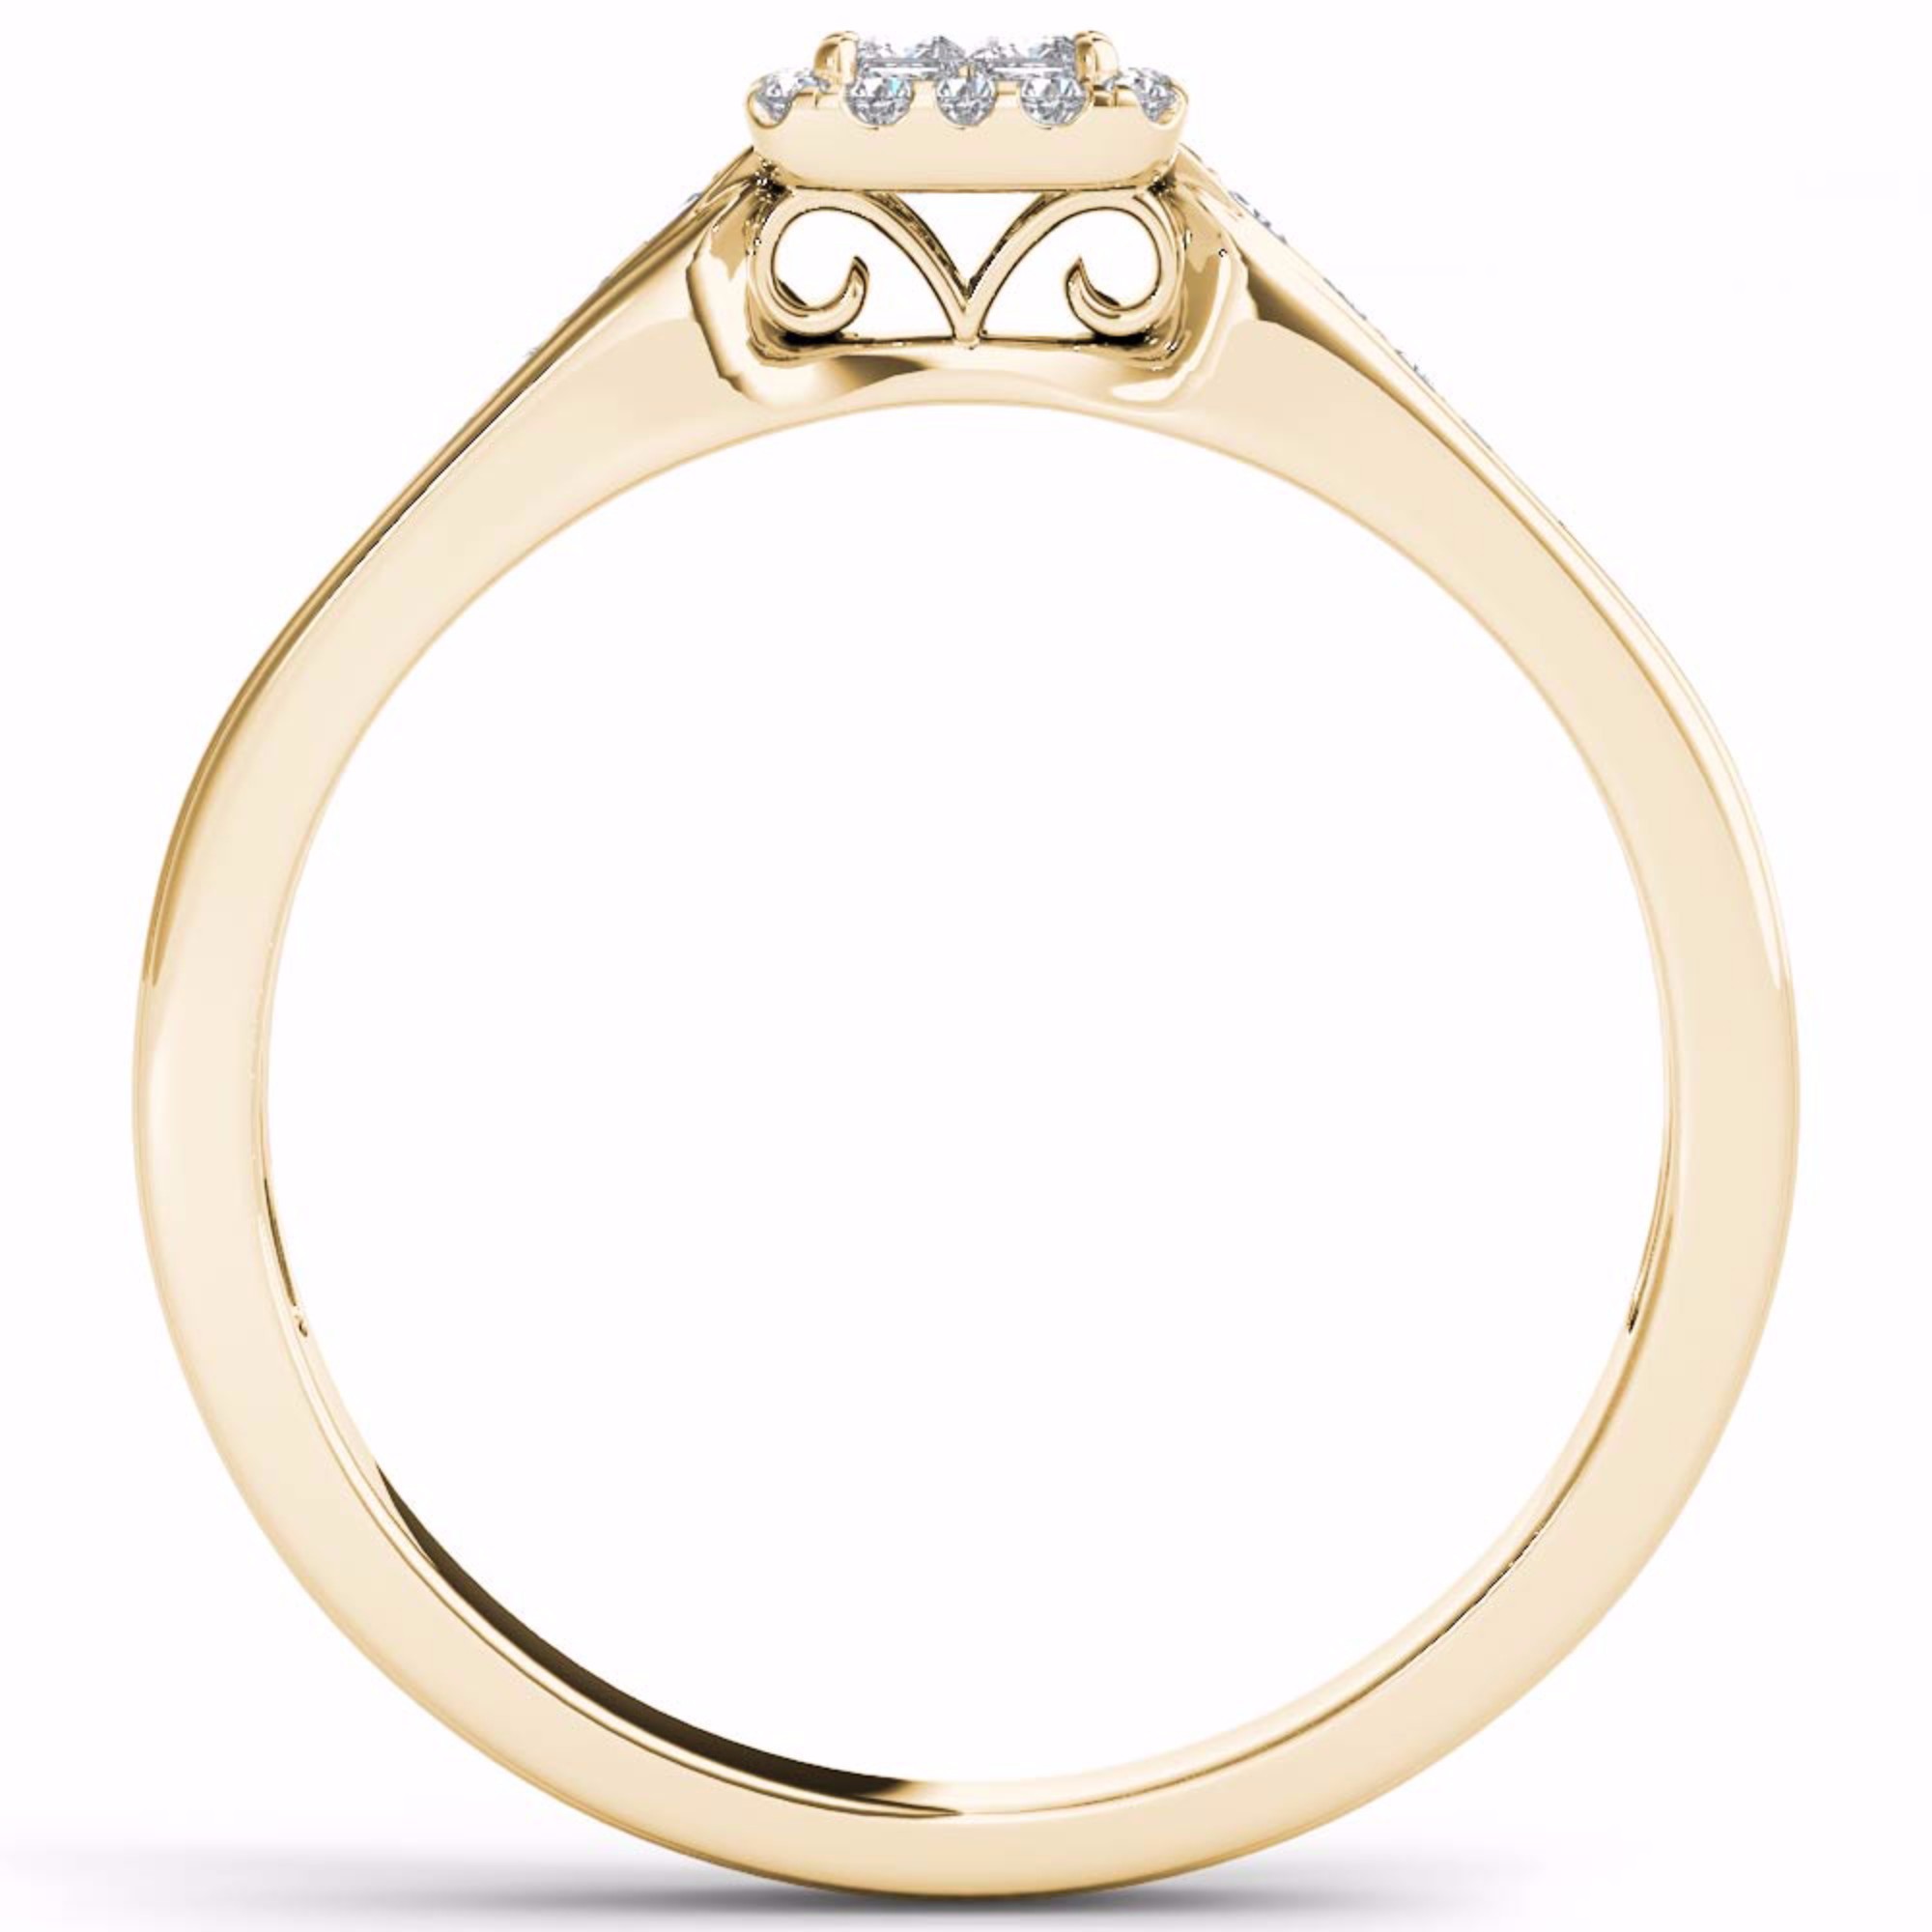 Amouria 10k Yellow Gold 1/4 Ct Princess Cut Diamond Halo Engagement Ring (HI, I2)